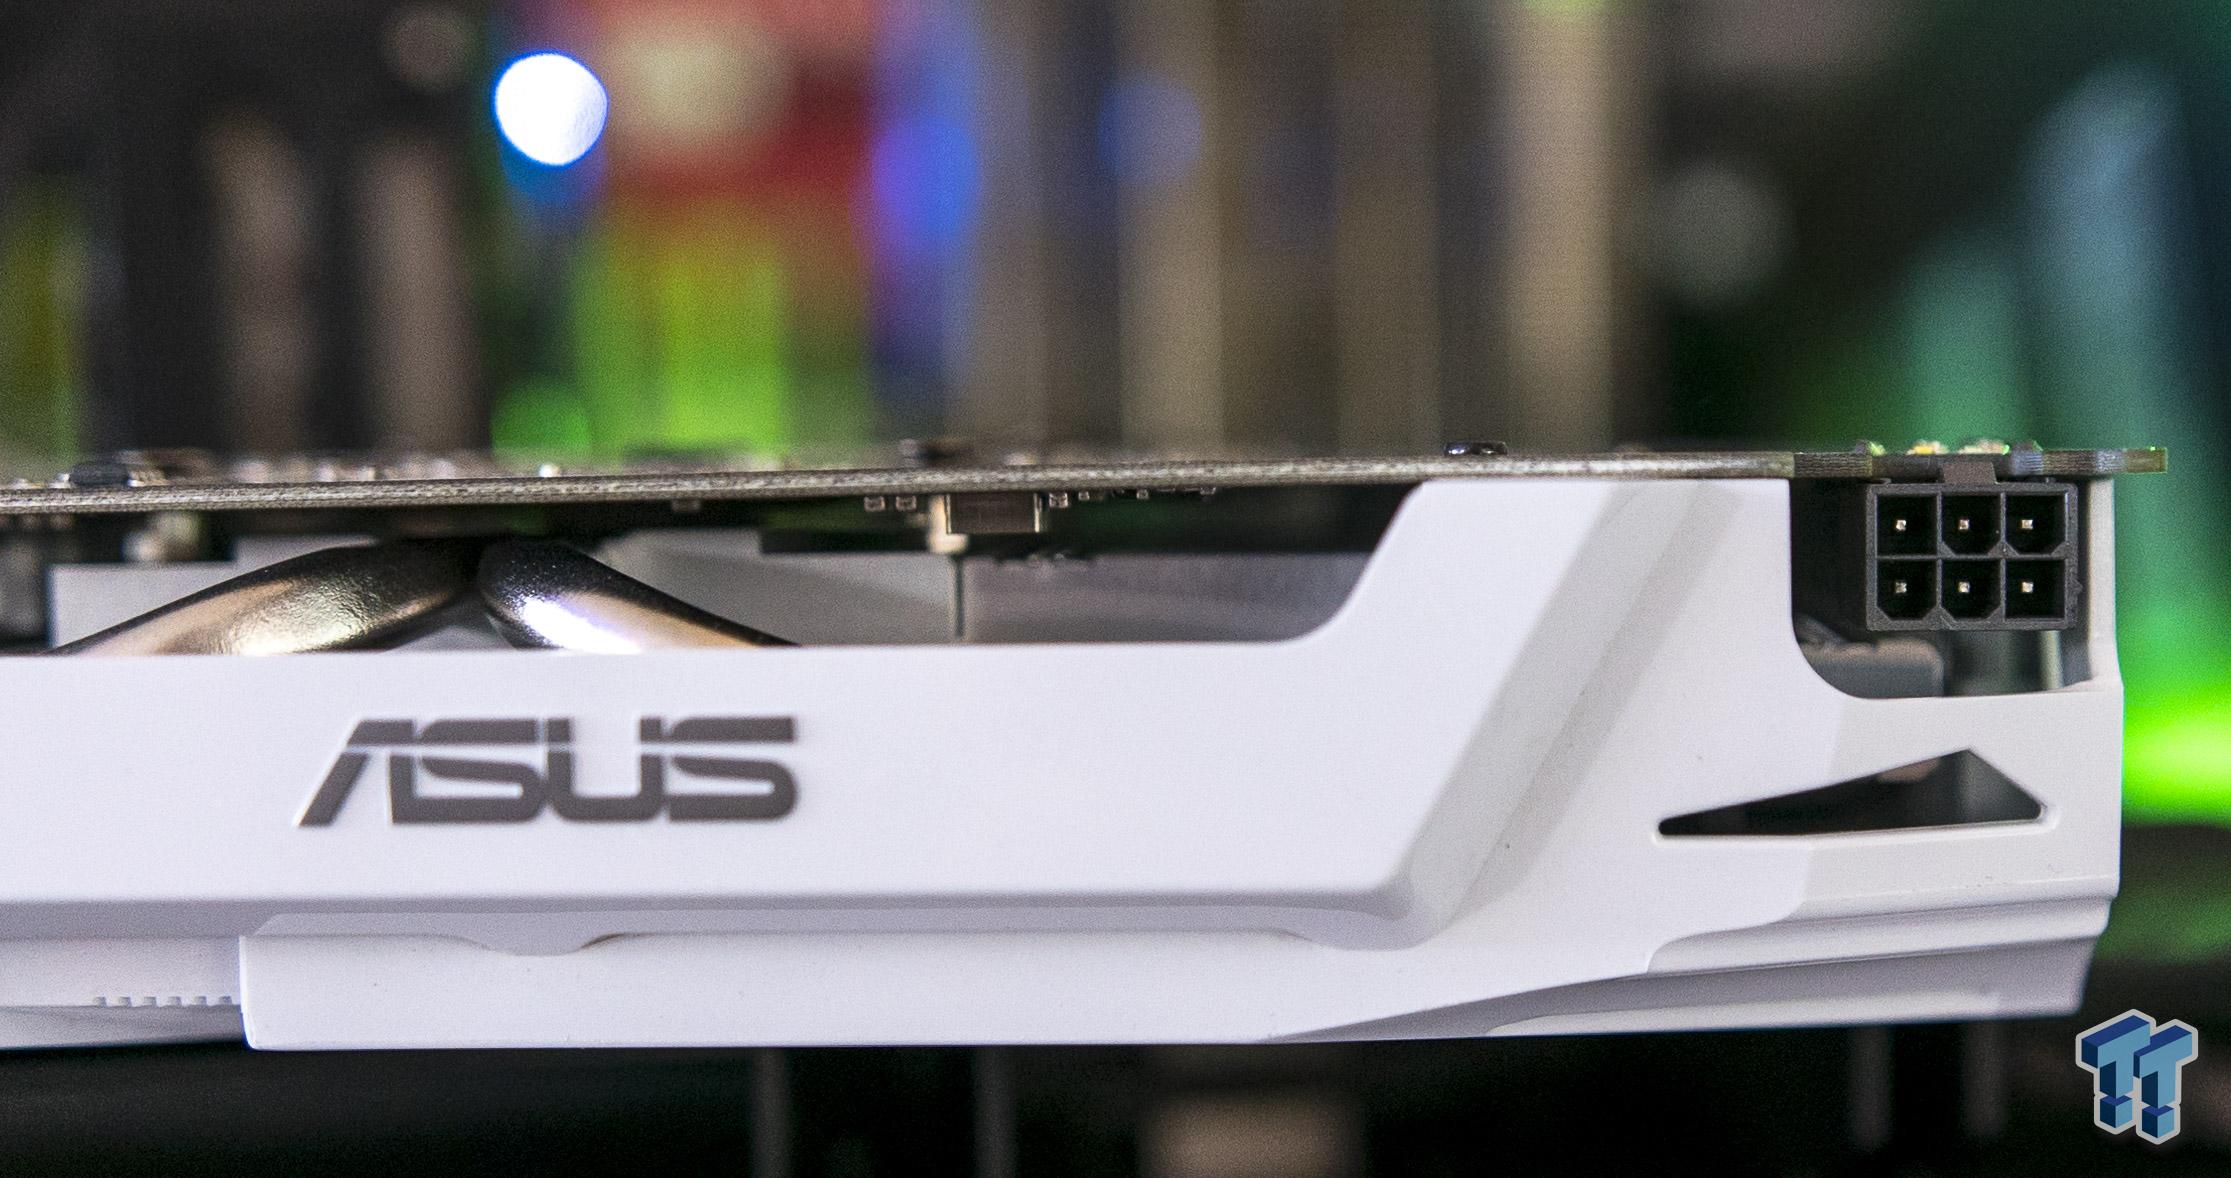 ASUS GeForce GTX 1060 Dual Mid-Range On Cheap